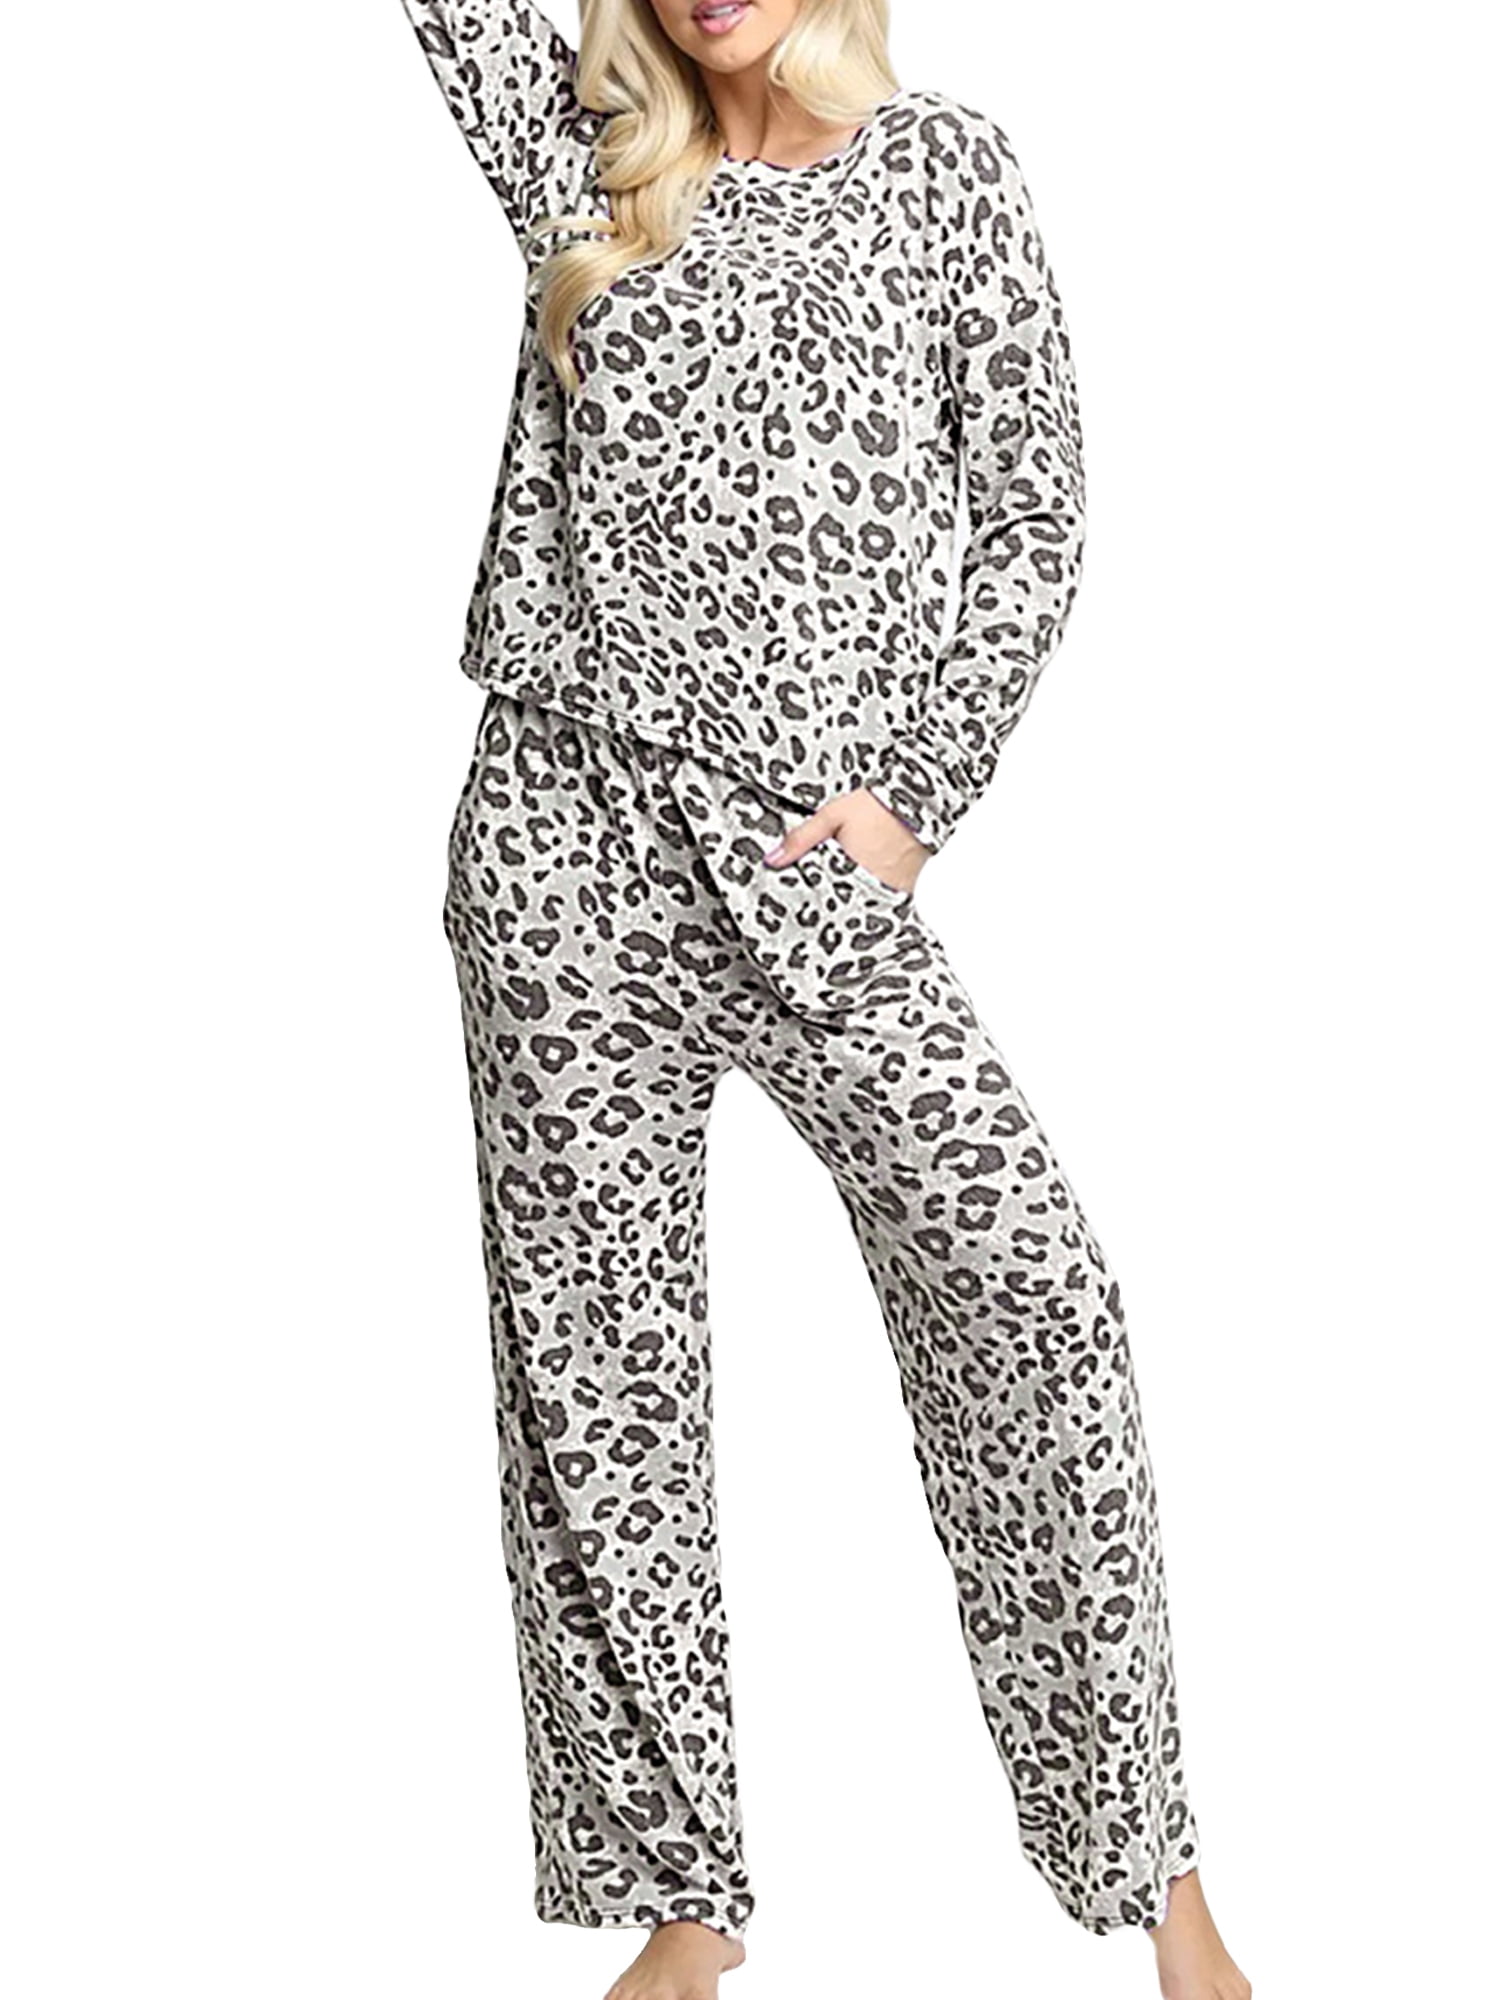 Details about   Comfy Leopard Print Sleepwear Loungewear Jogger Pajamas Set Plus Size 8-22 